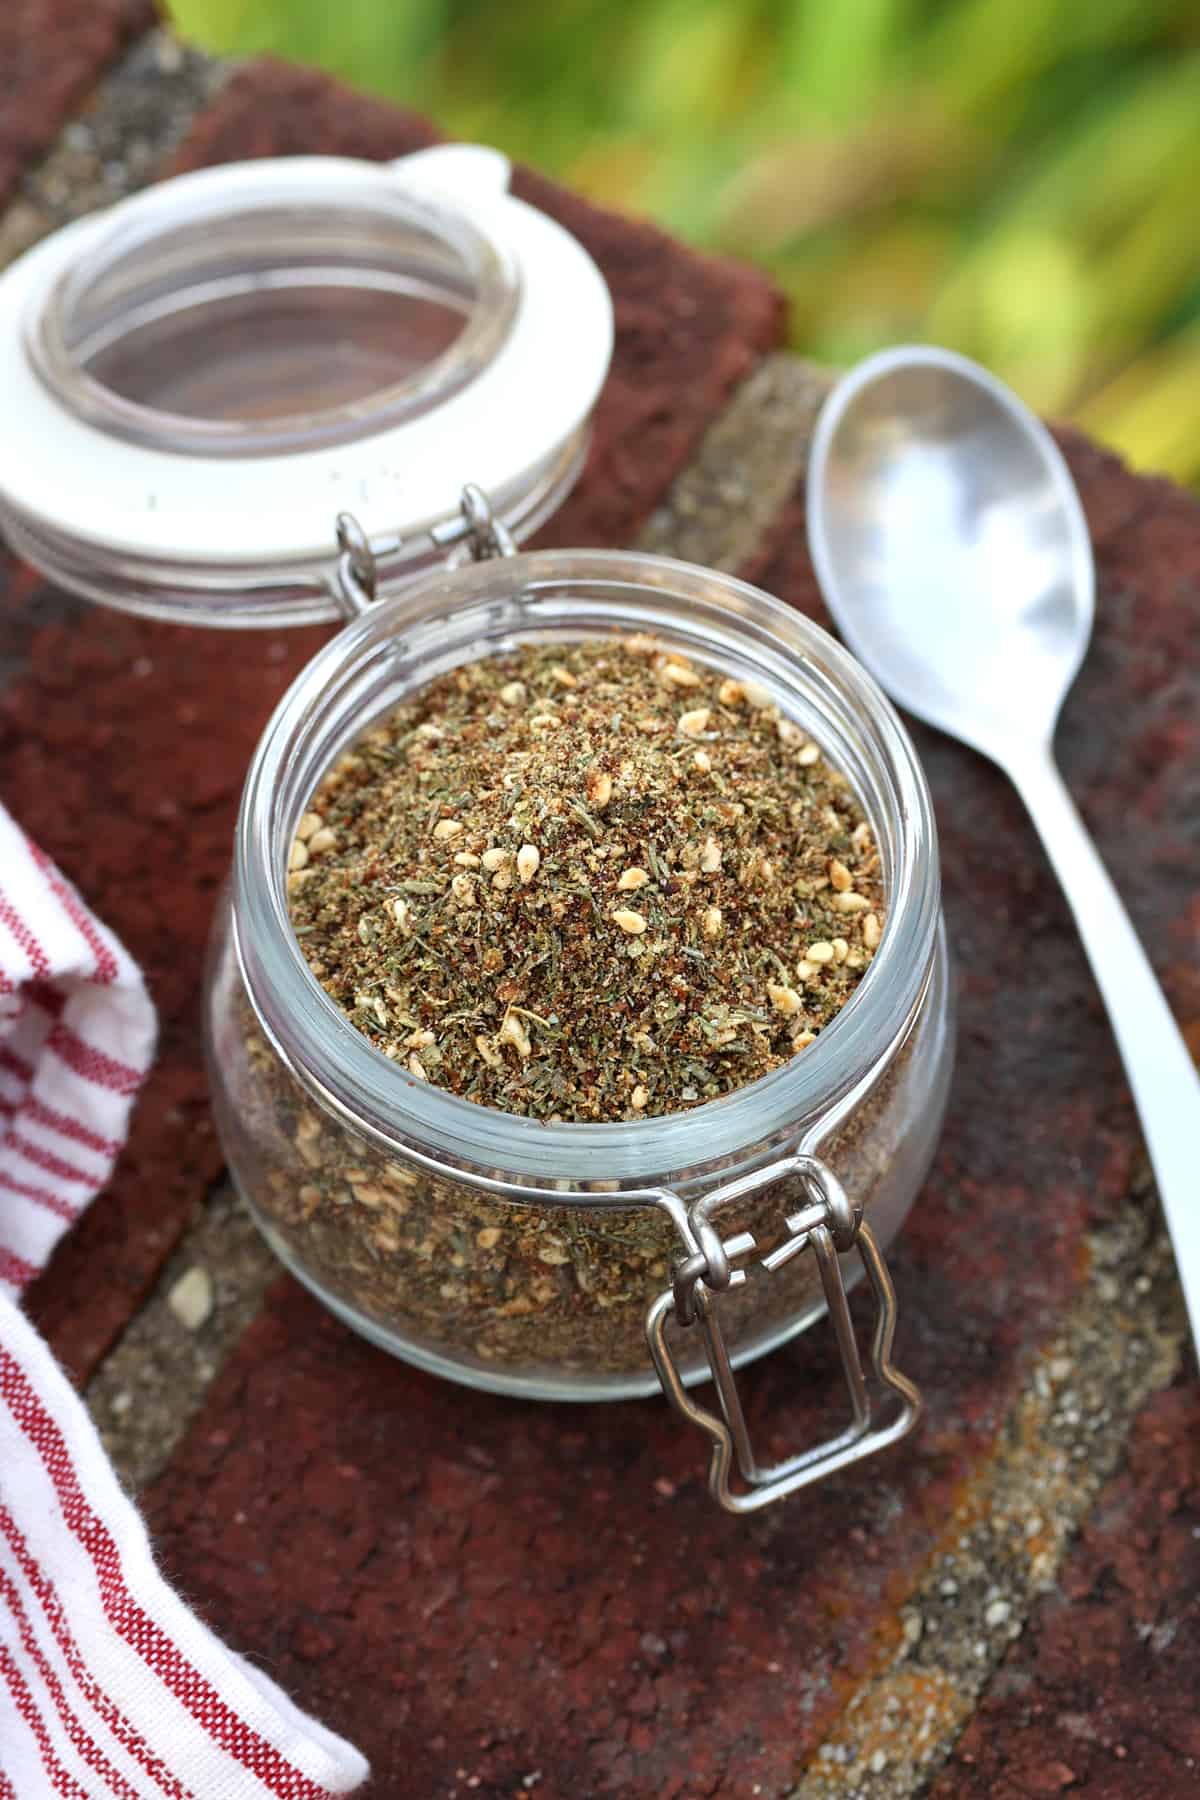 za'atar recipe homemade seasoning blend spice mix Middle Eastern sesame seeds sumac zaatar